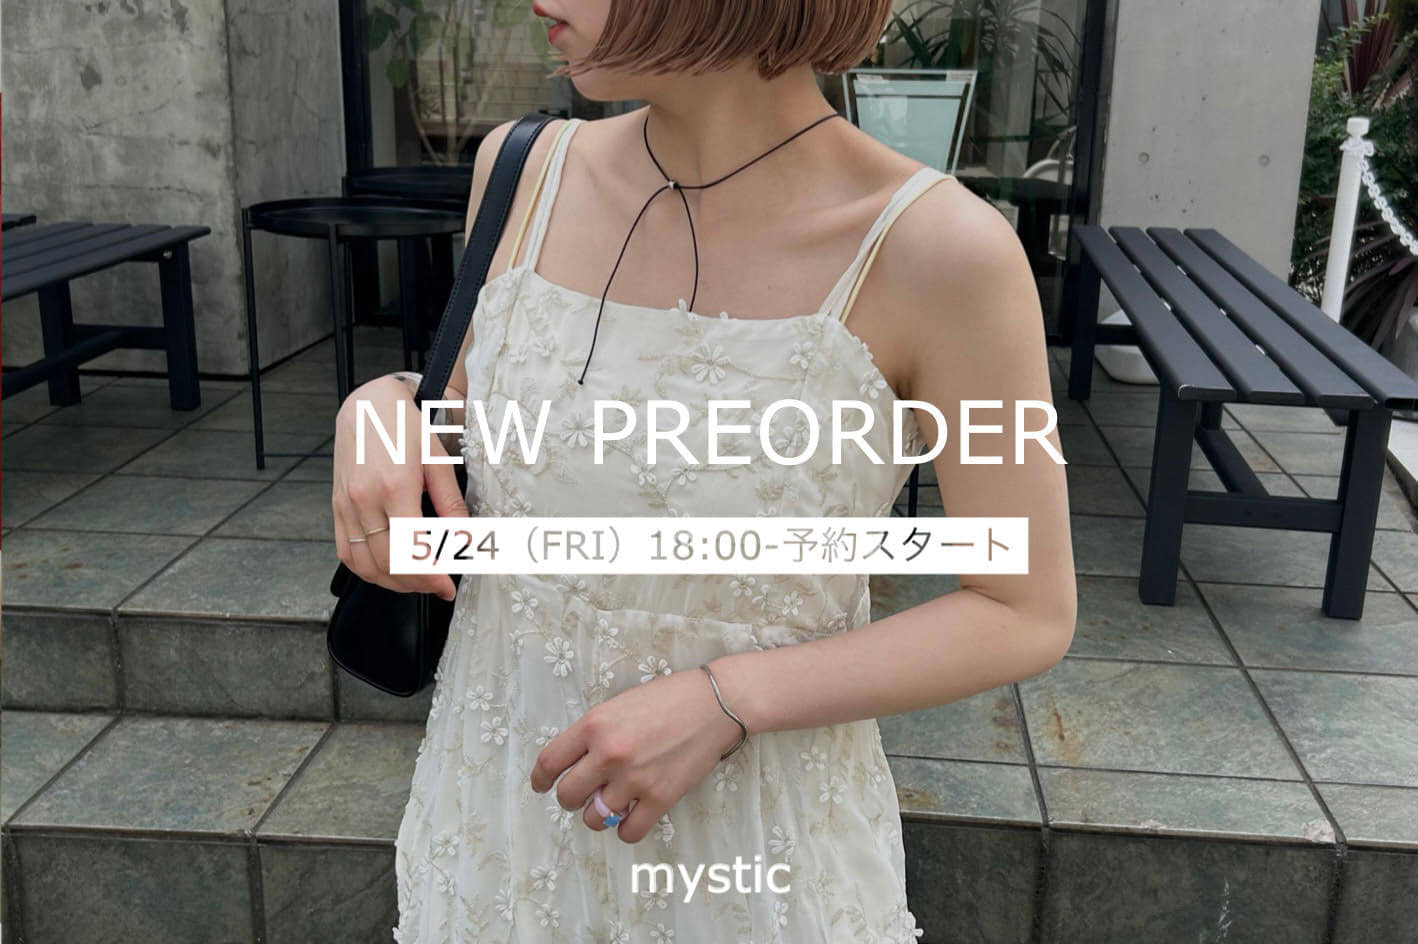 mystic 【mystic】new preorder start